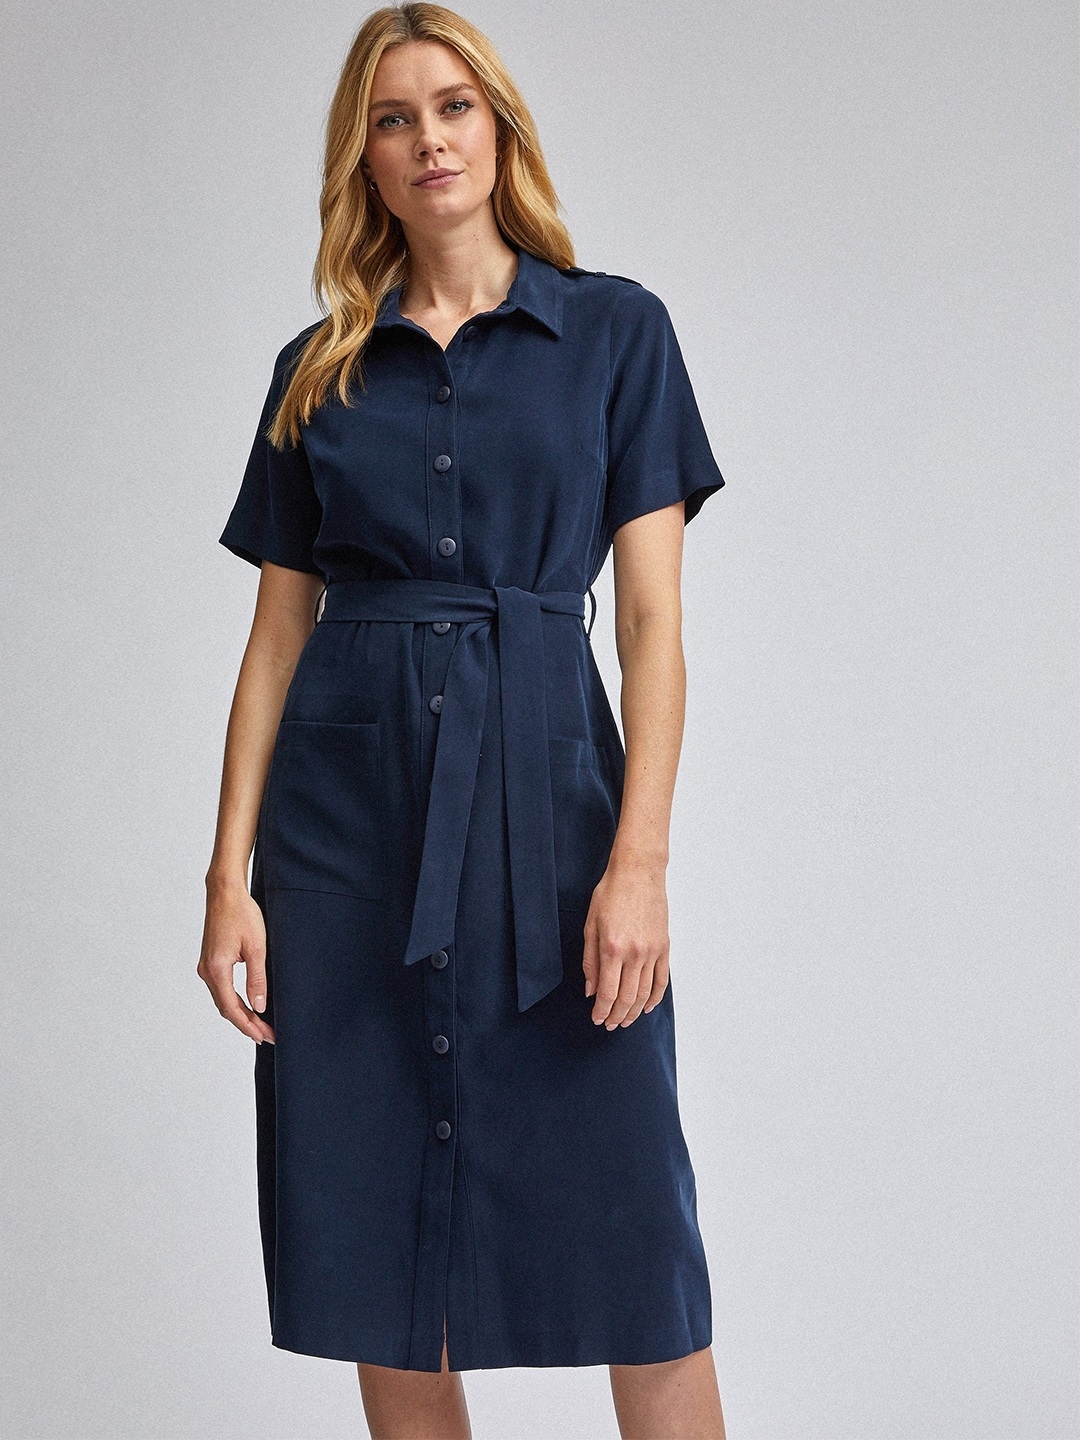 Buy DOROTHY PERKINS Women Navy Blue Solid Shirt Dress - Dresses for ...